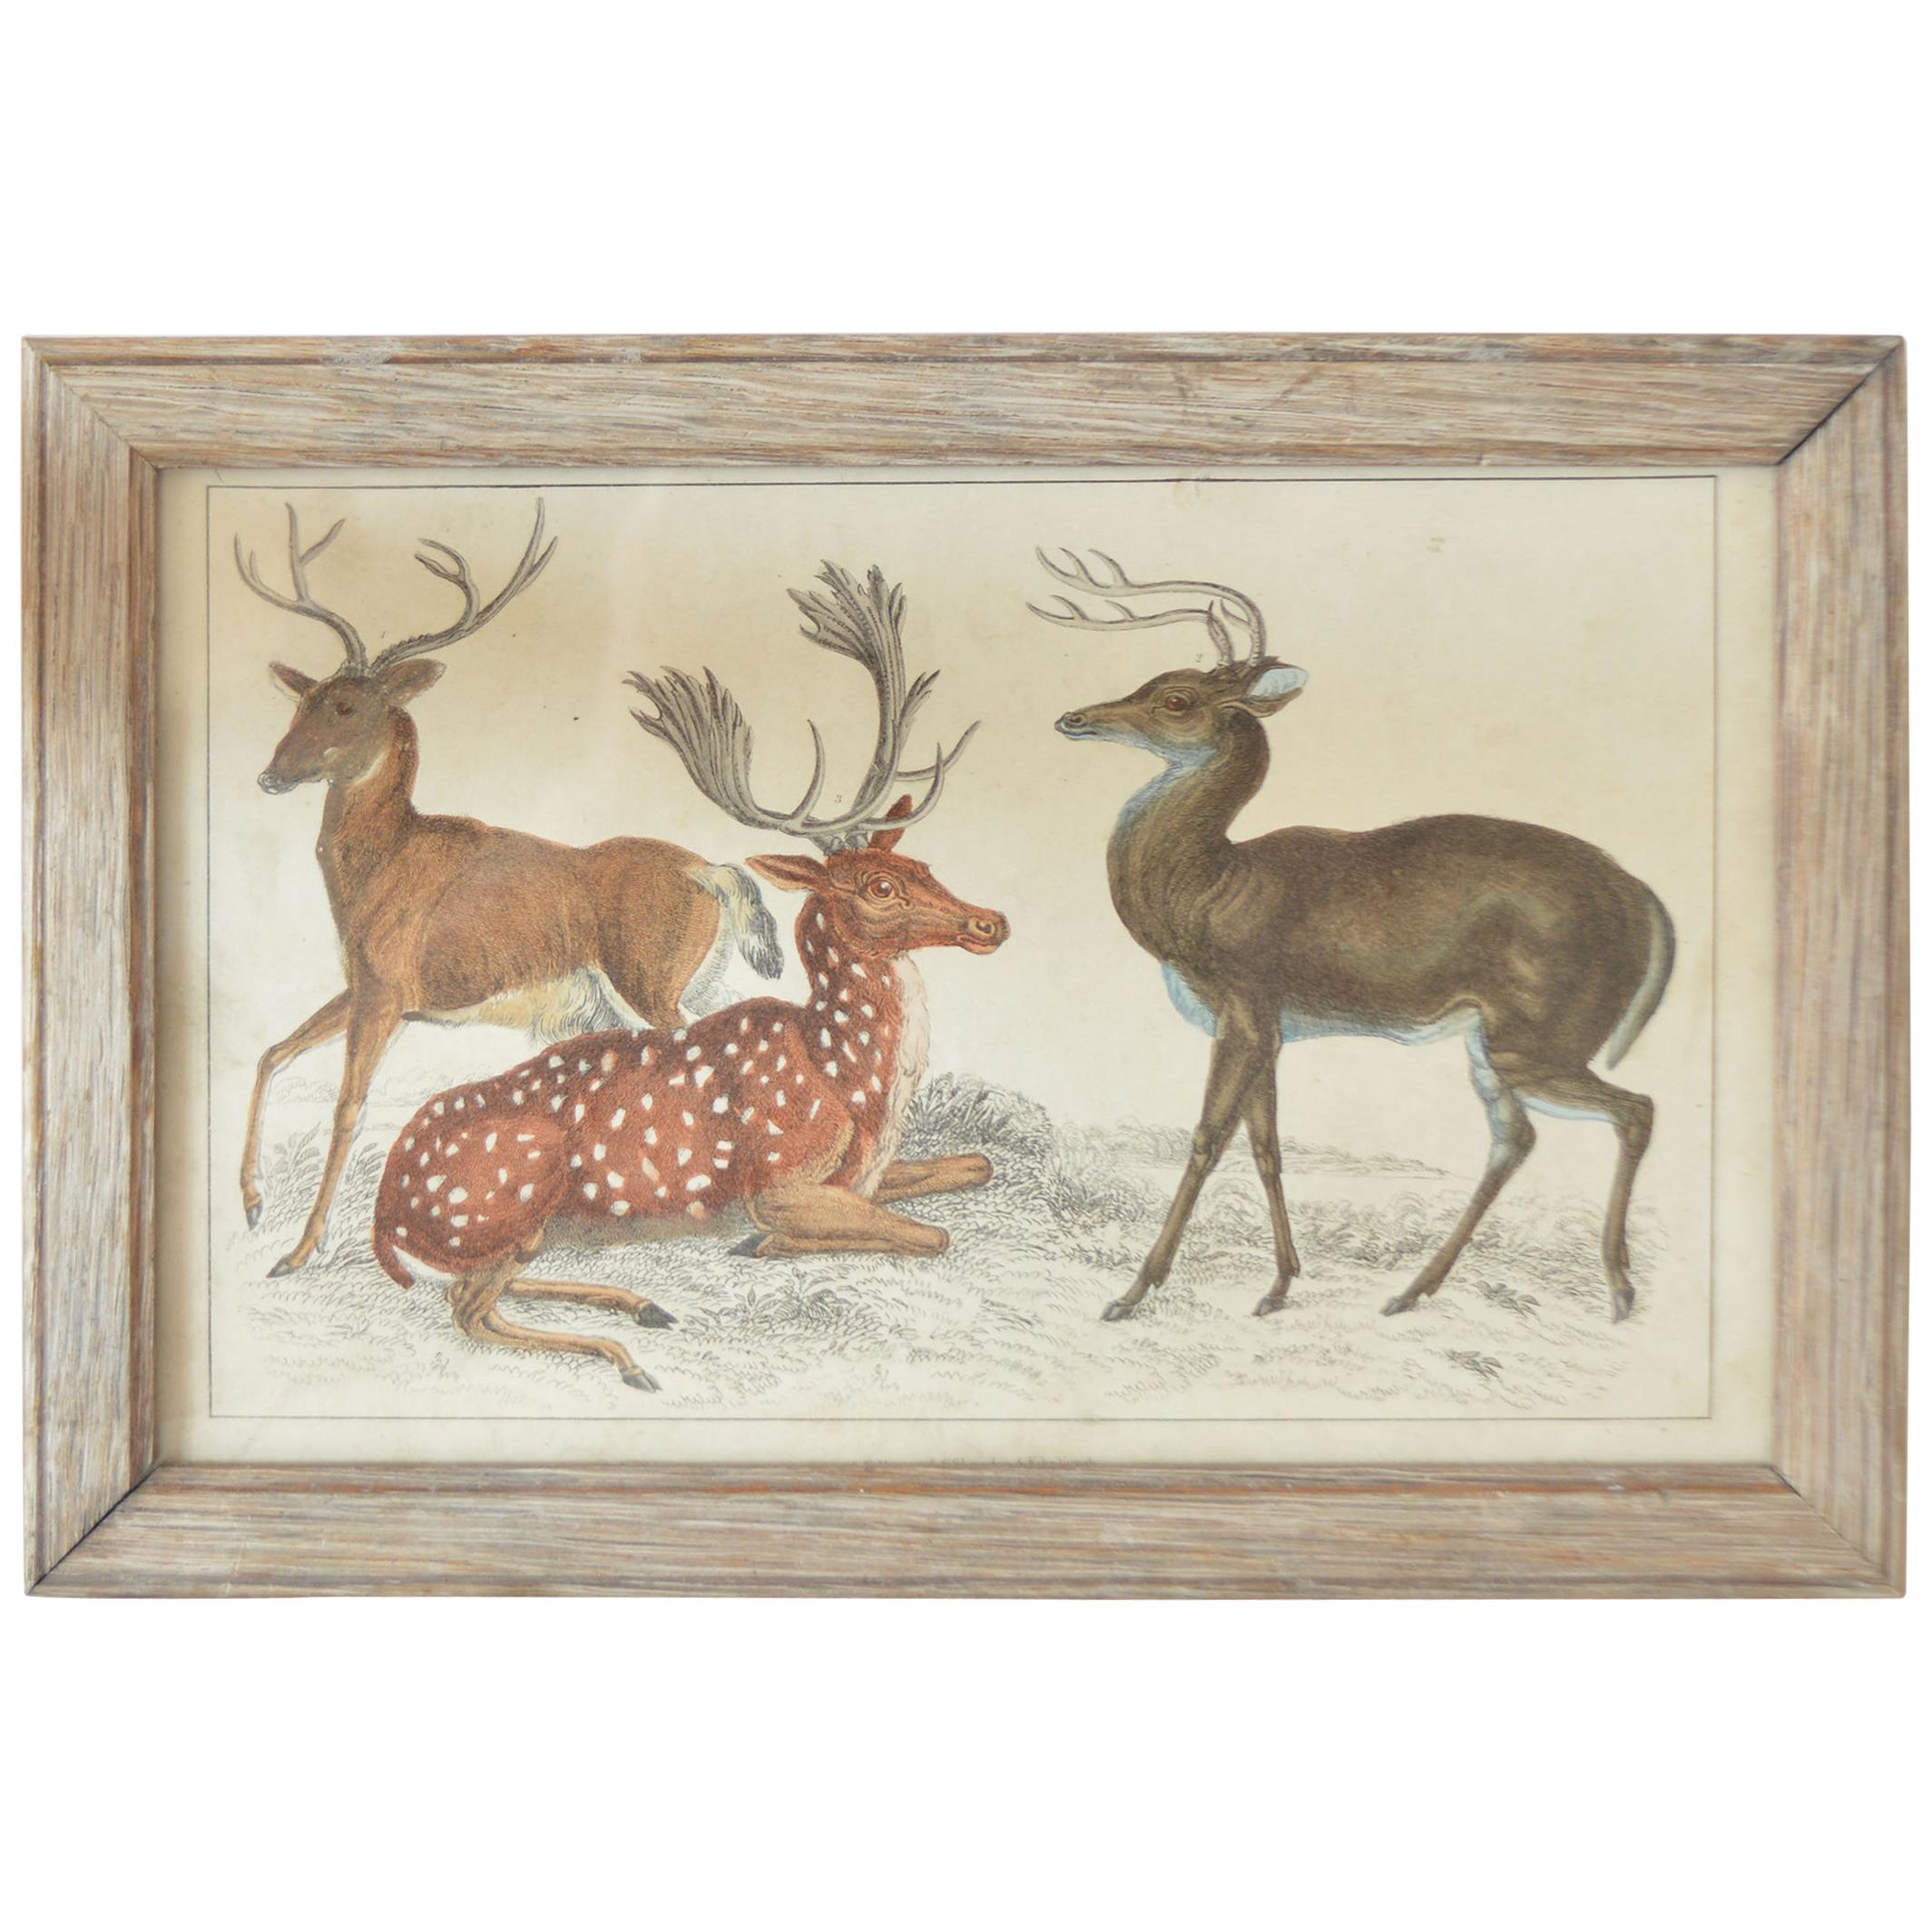 Original Antique Print of Deer, 1847